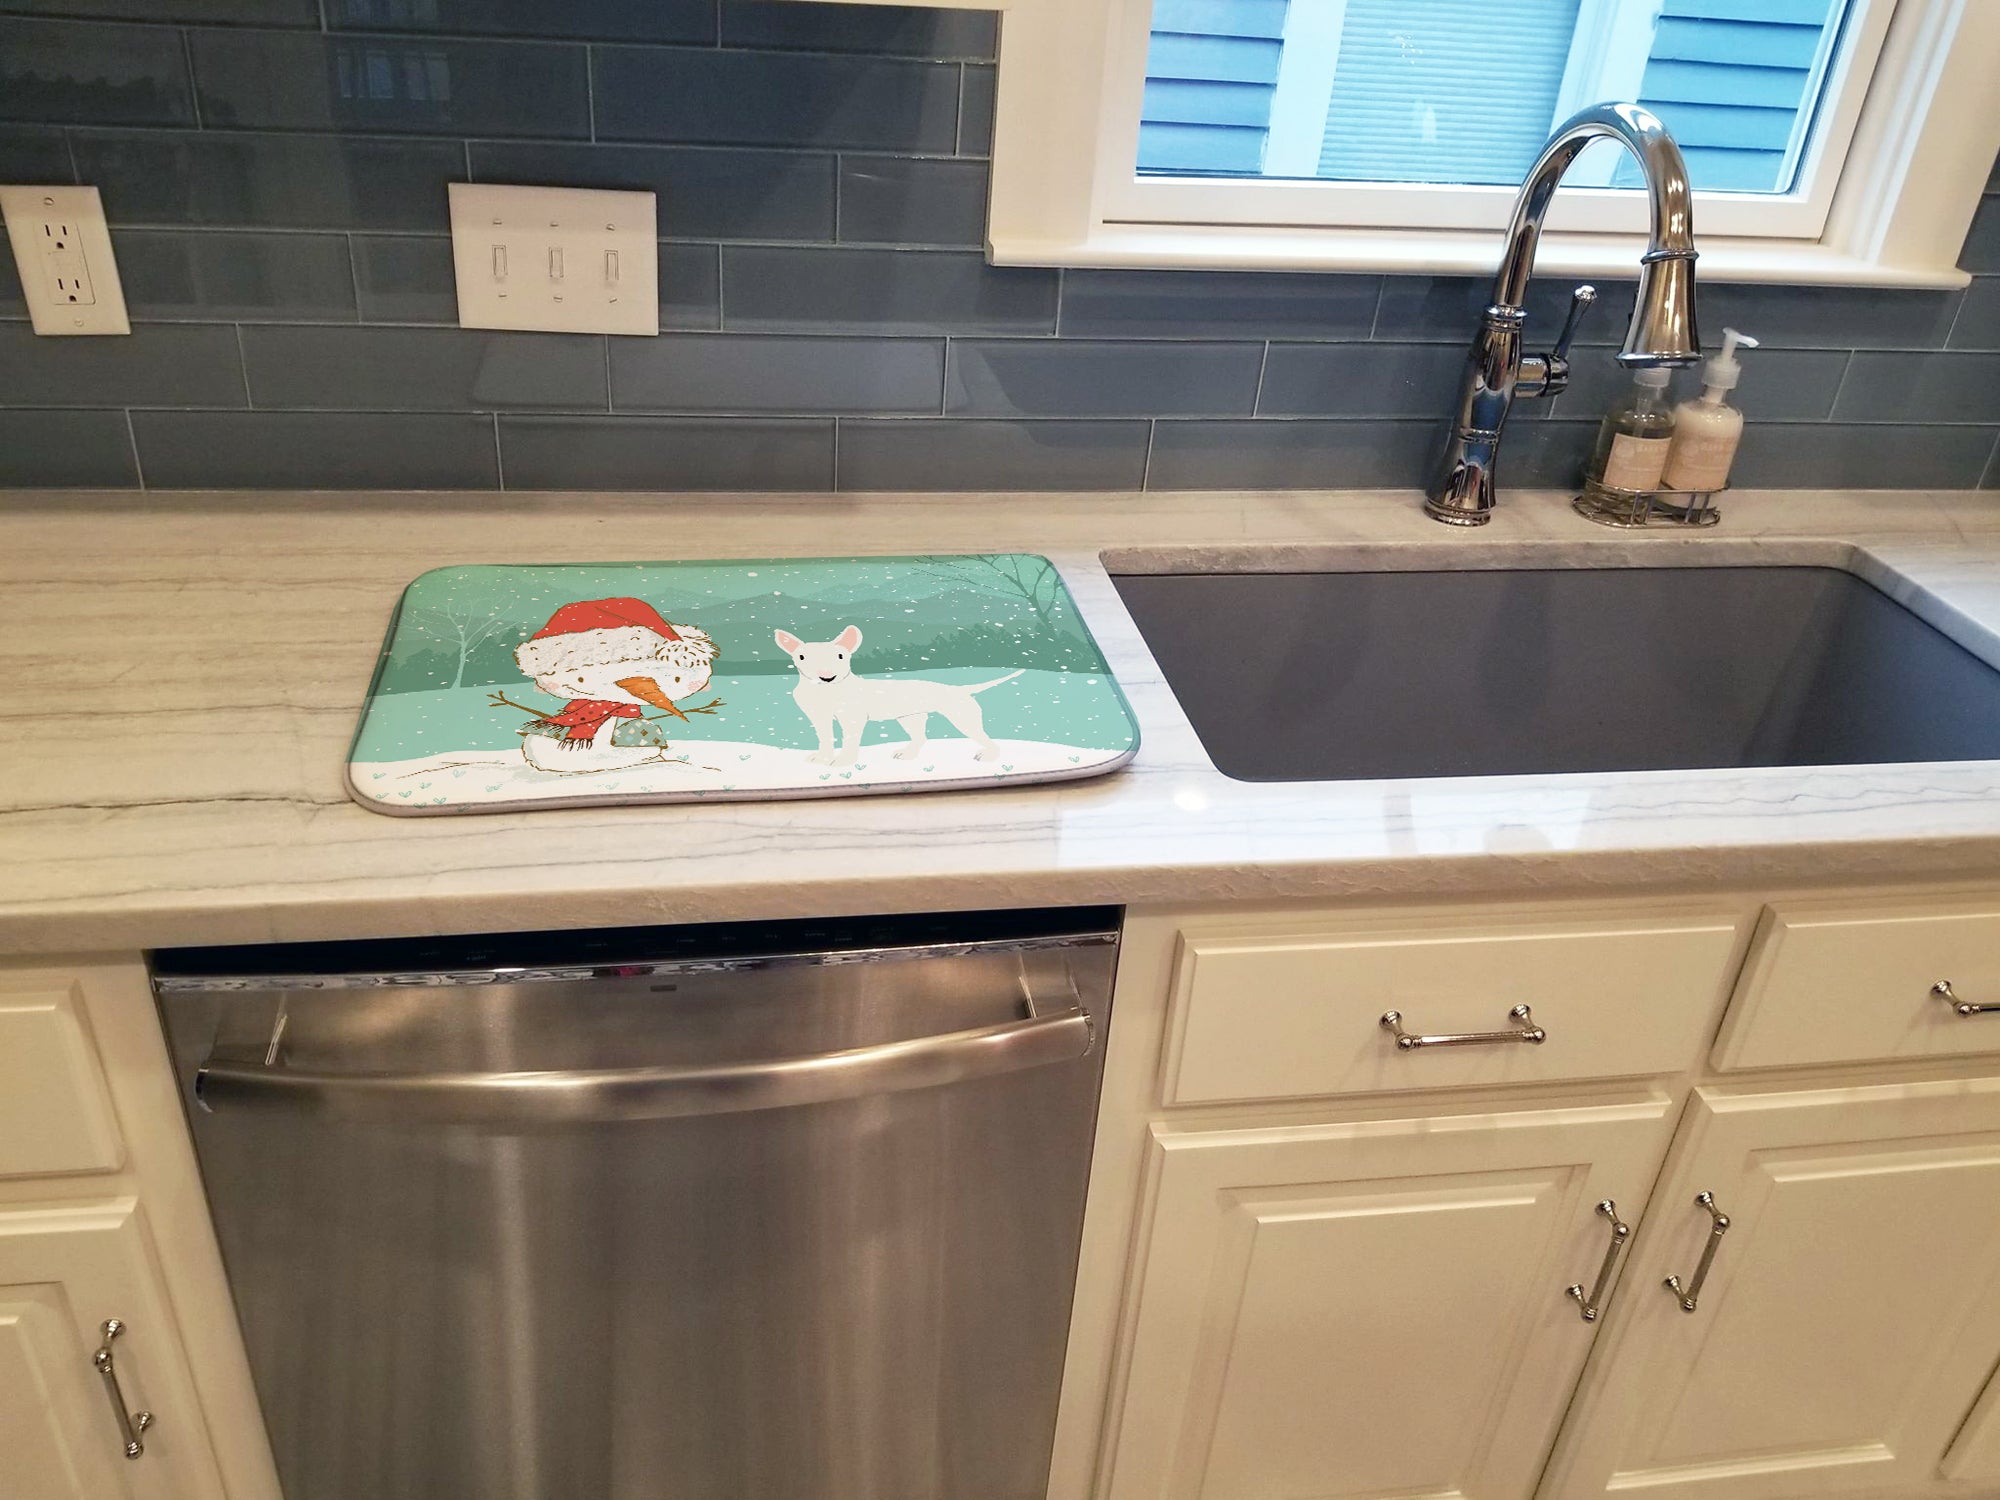 White Bull Terrier Snowman Christmas Dish Drying Mat CK2058DDM